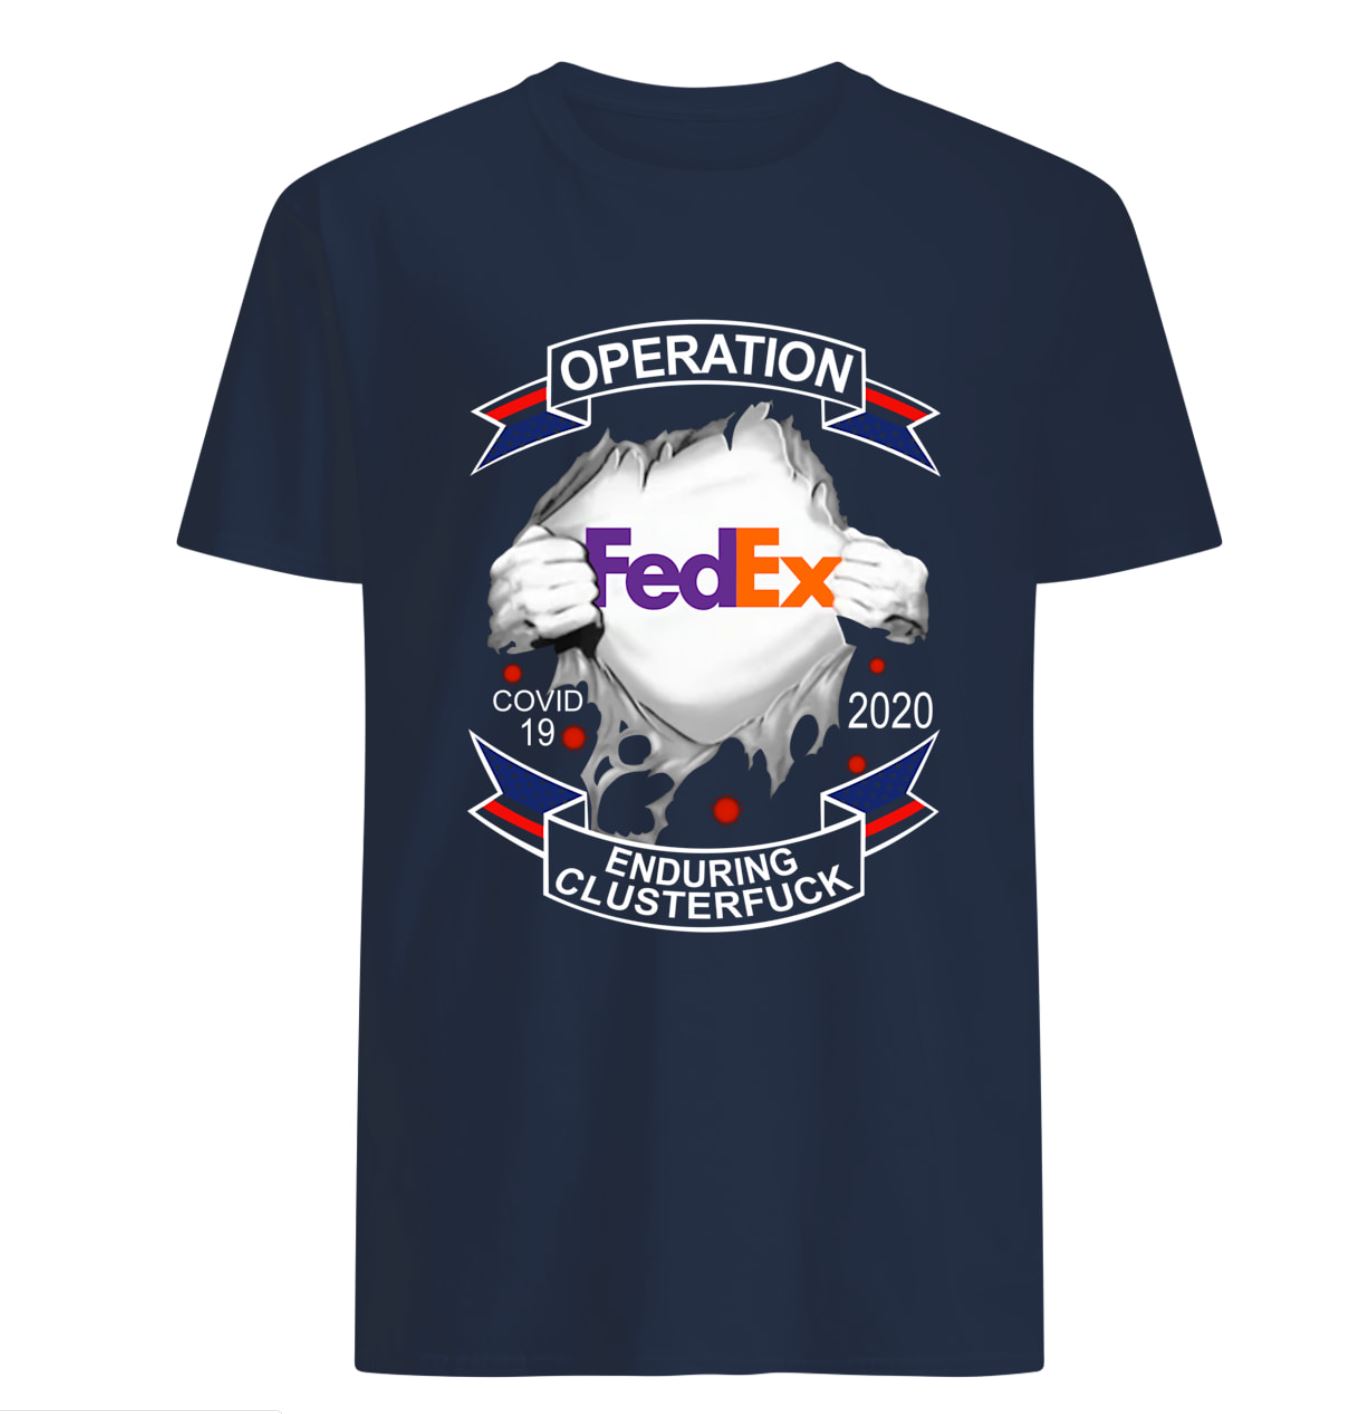 FedEx operation enduring clusterfuck covid 19 shirt